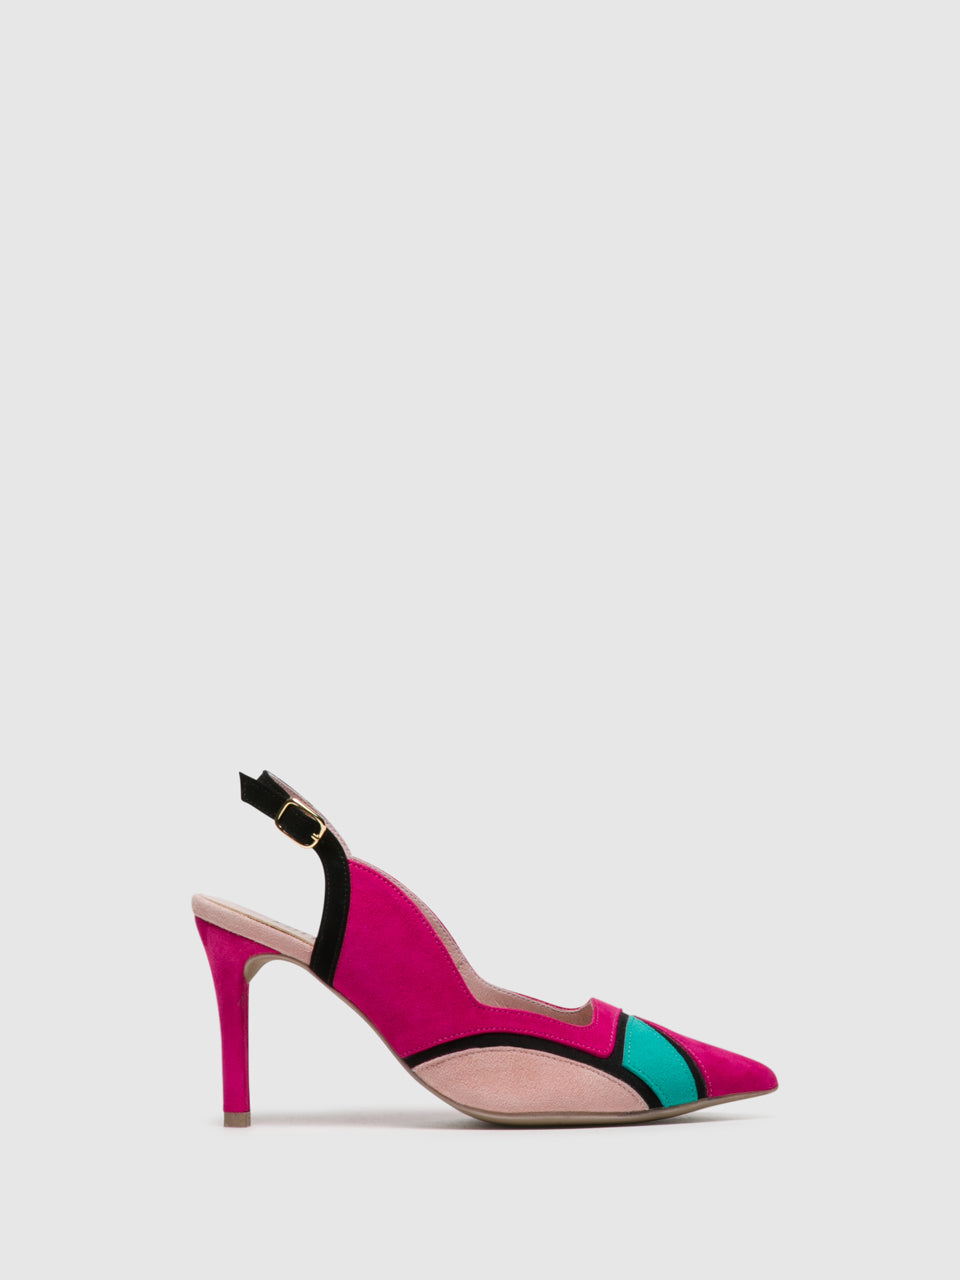 Foreva Tan Pink Stiletto Shoes